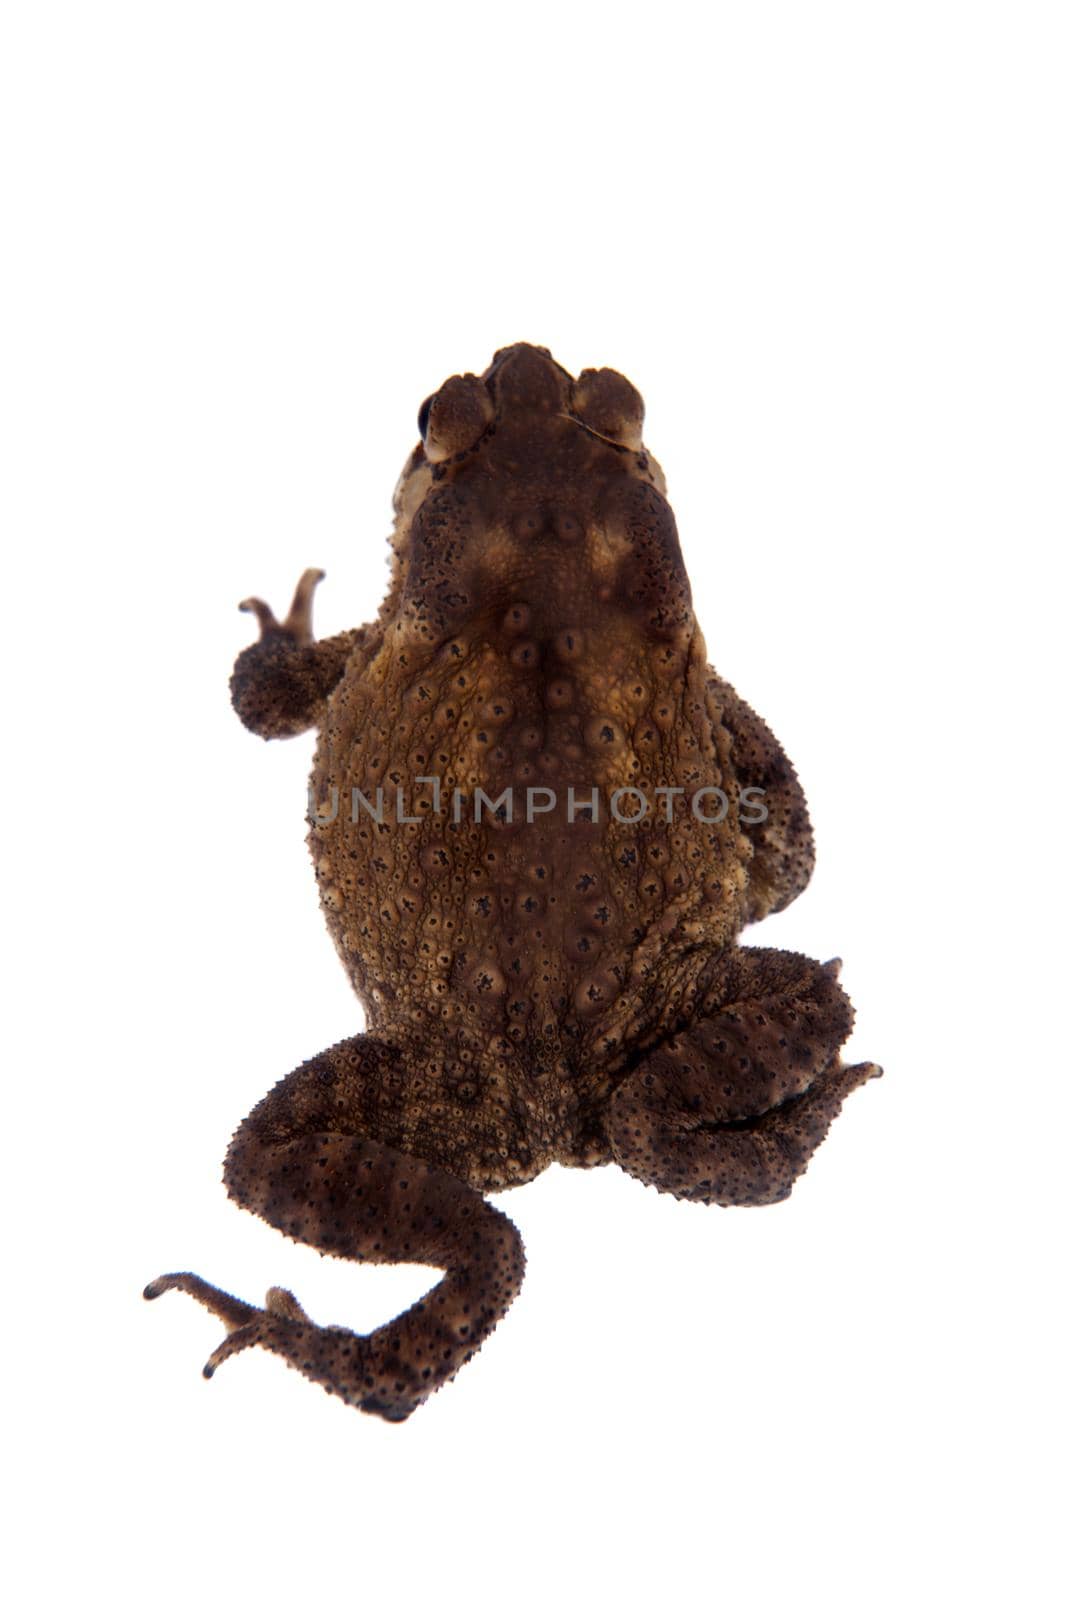 The bony-headed toad, Ingerophrynus galeatus, isolated on white background